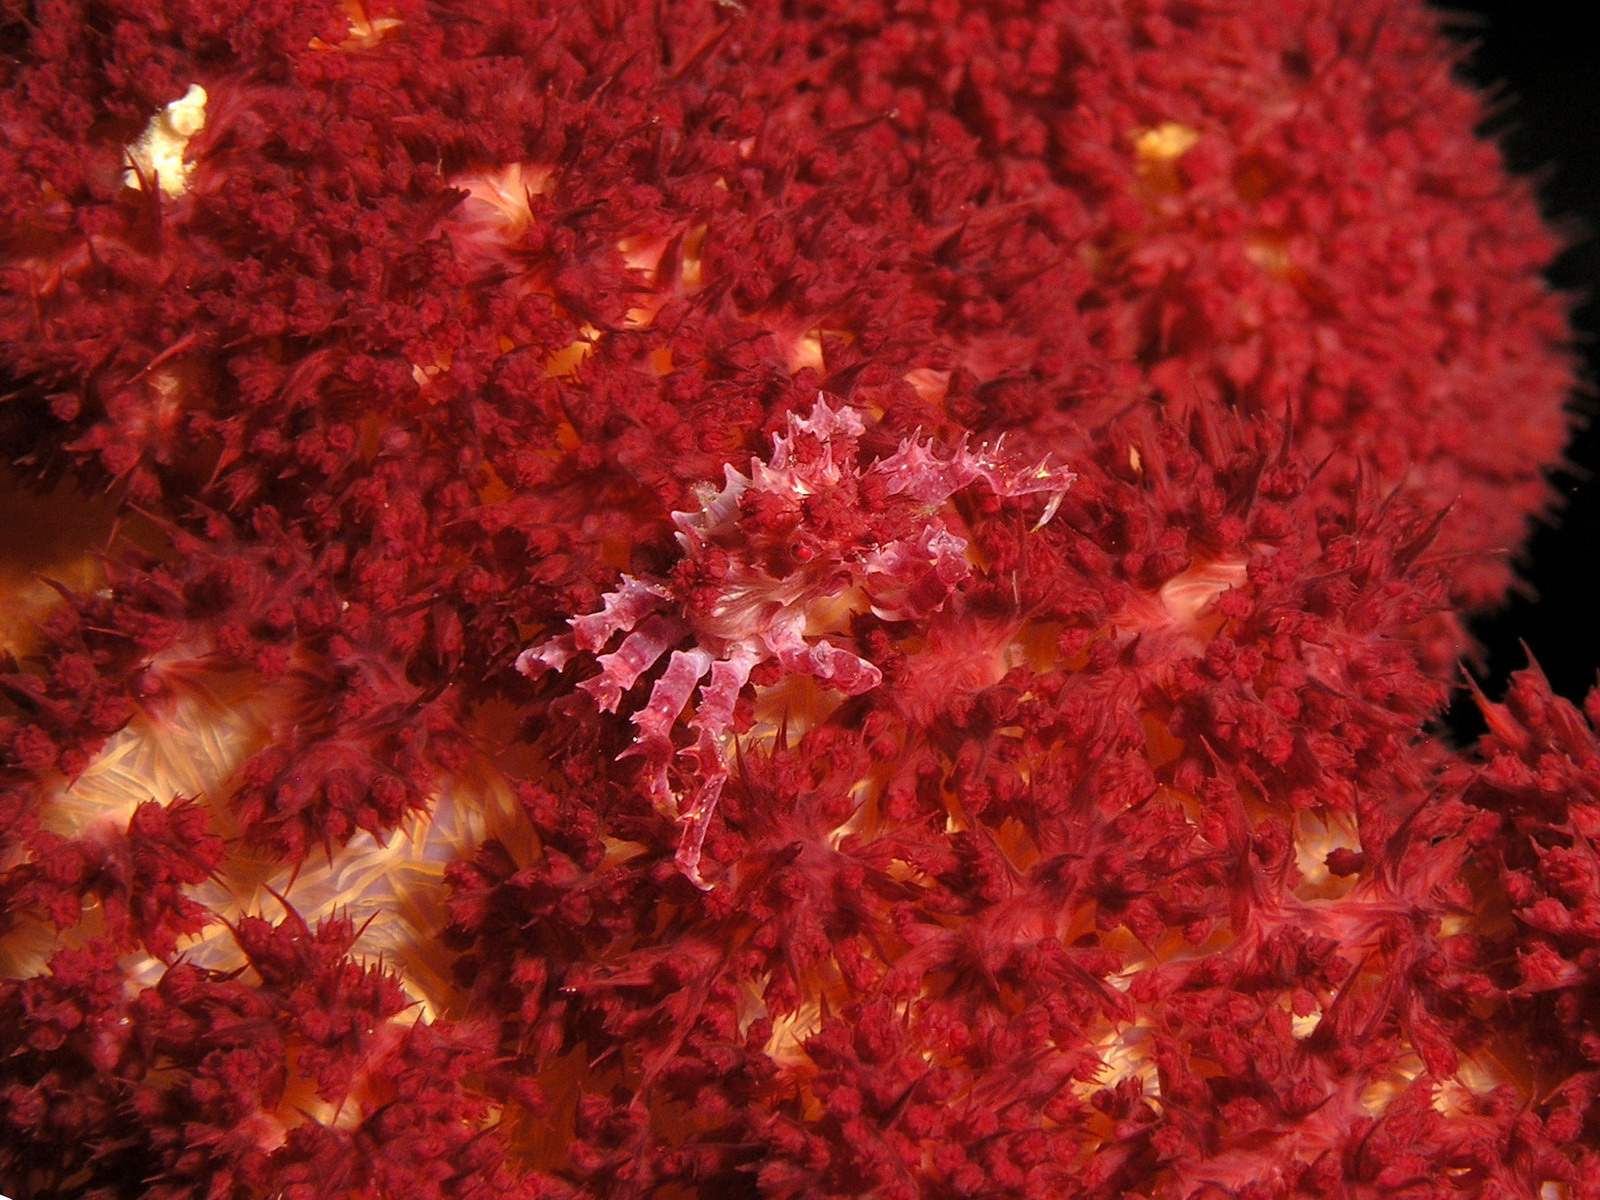 Soft Coral Camuflage